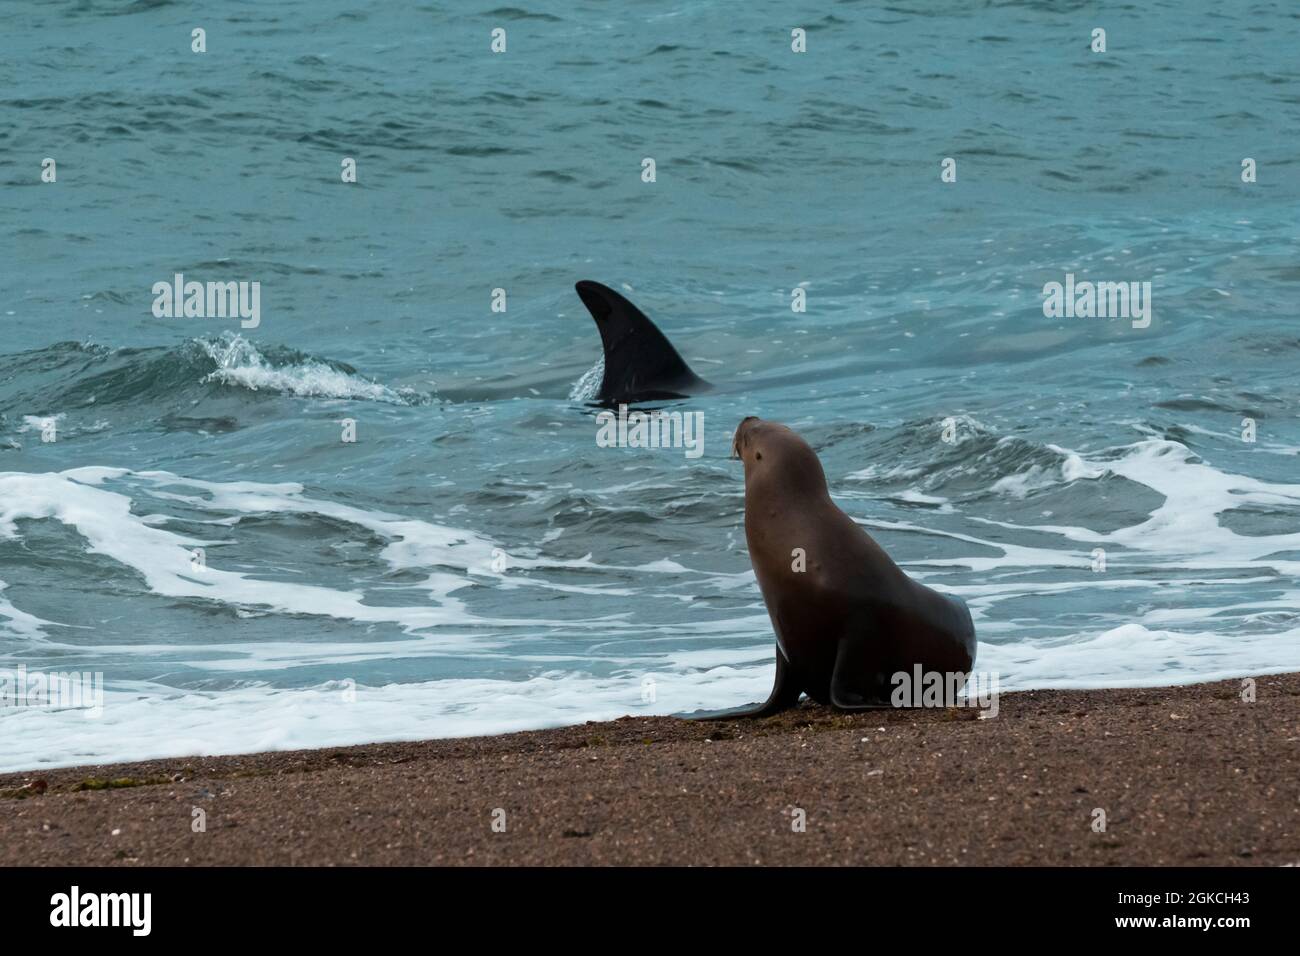 Caccia alle balene killer leoni marini, Patagonia, Argentina. Foto Stock